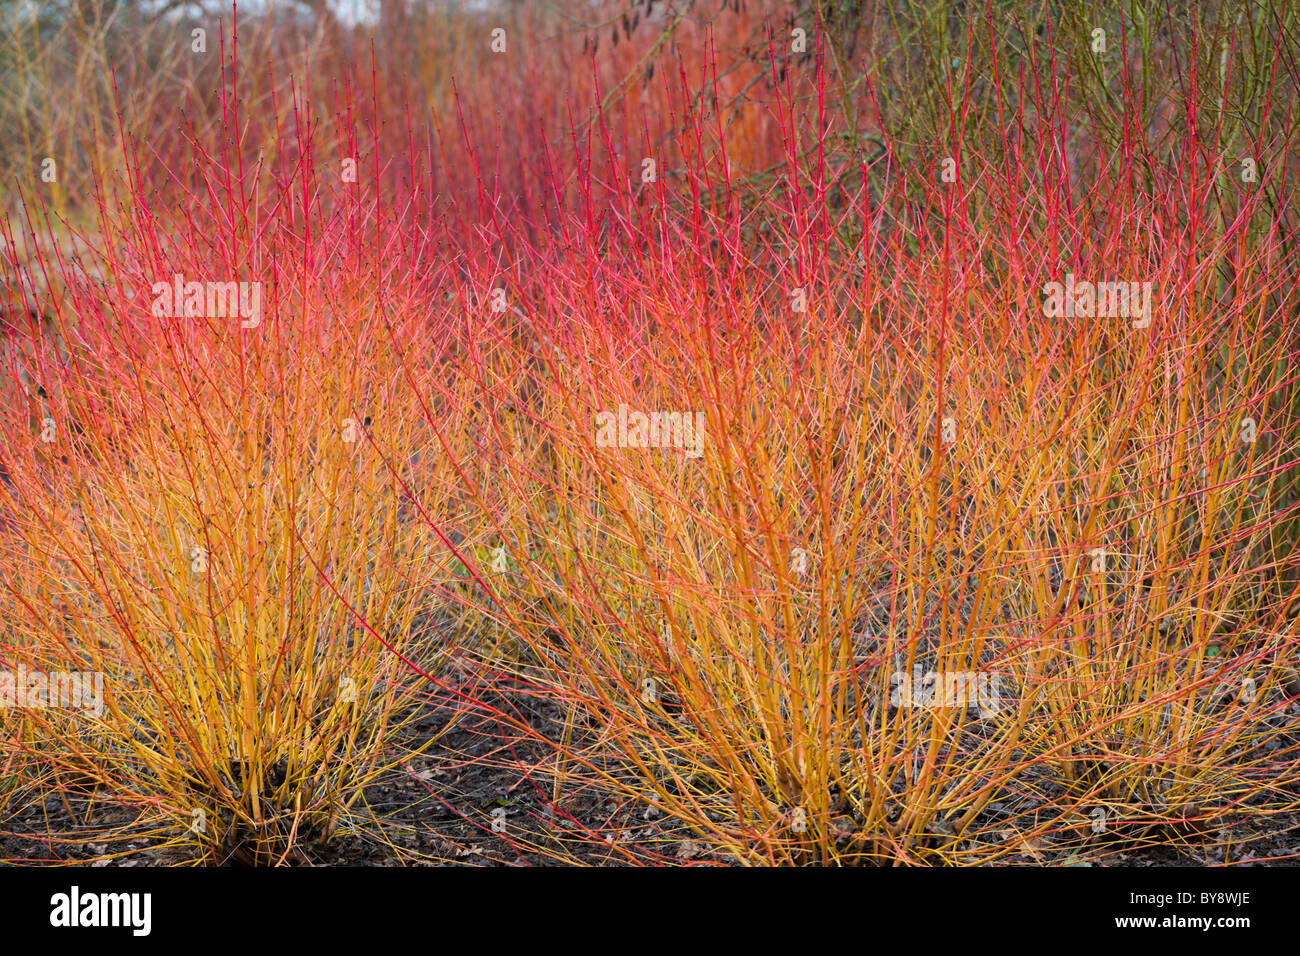 Dogwood shrub hi-res stock photography and images - Alamy